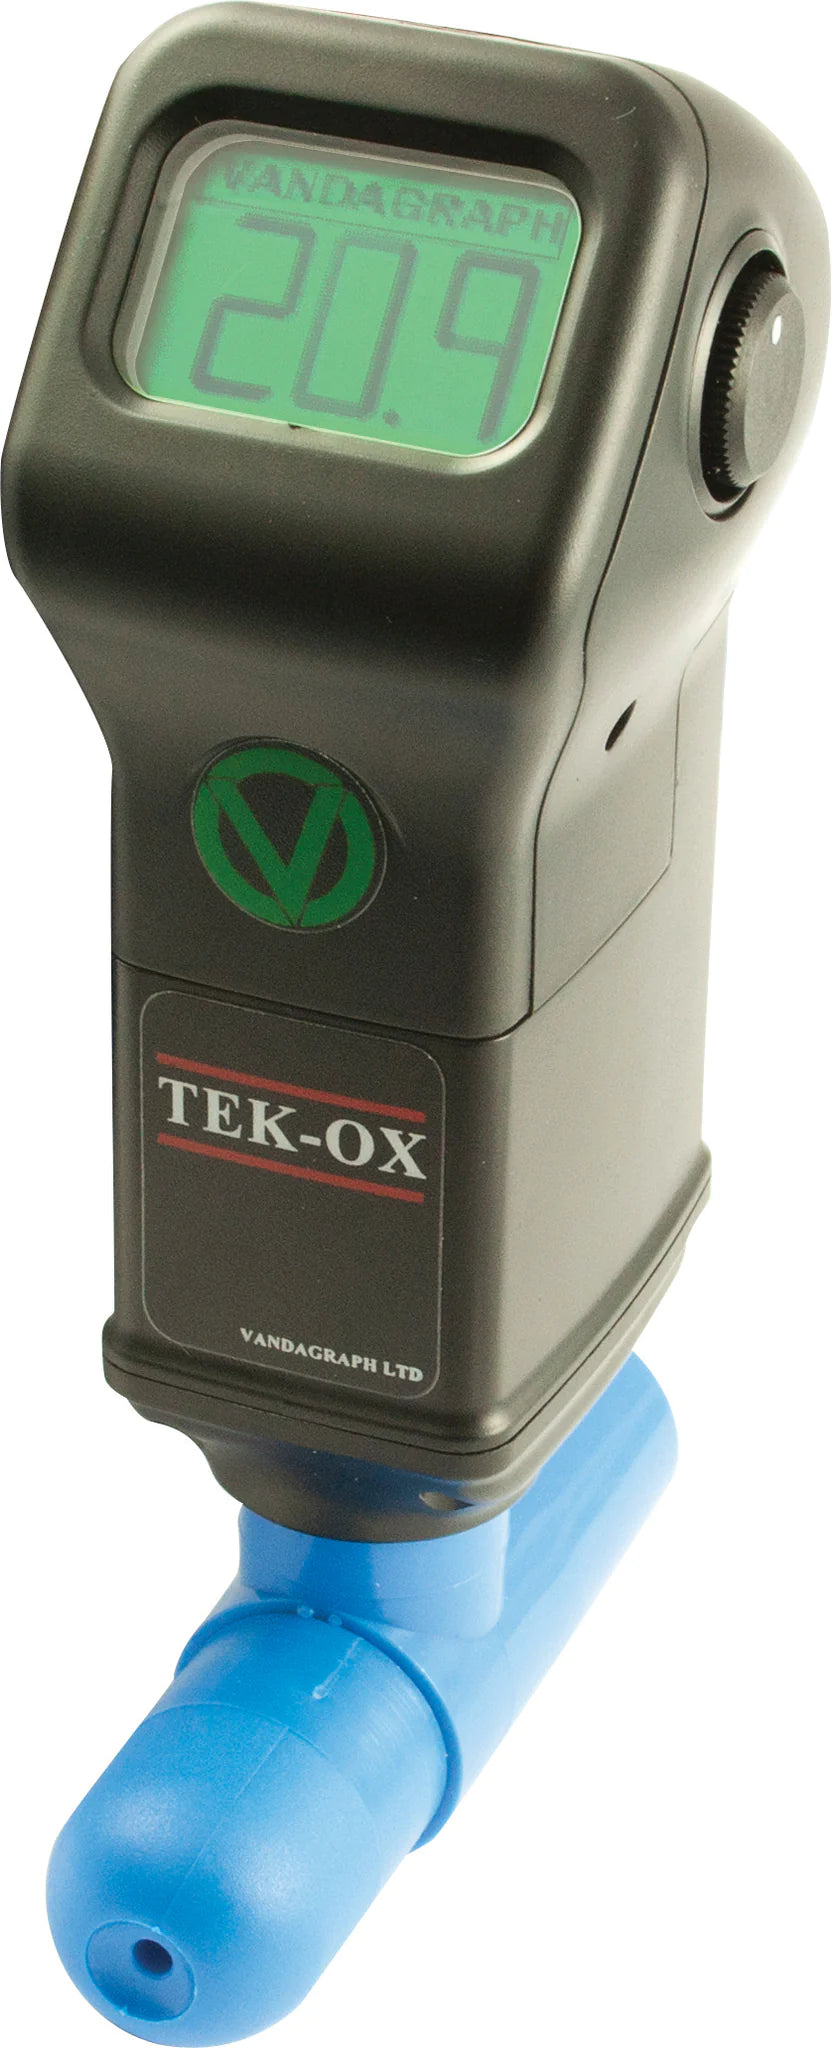 Tek-Ox with Quick Ox (Auto Switch-Off) Oxygen Sensor